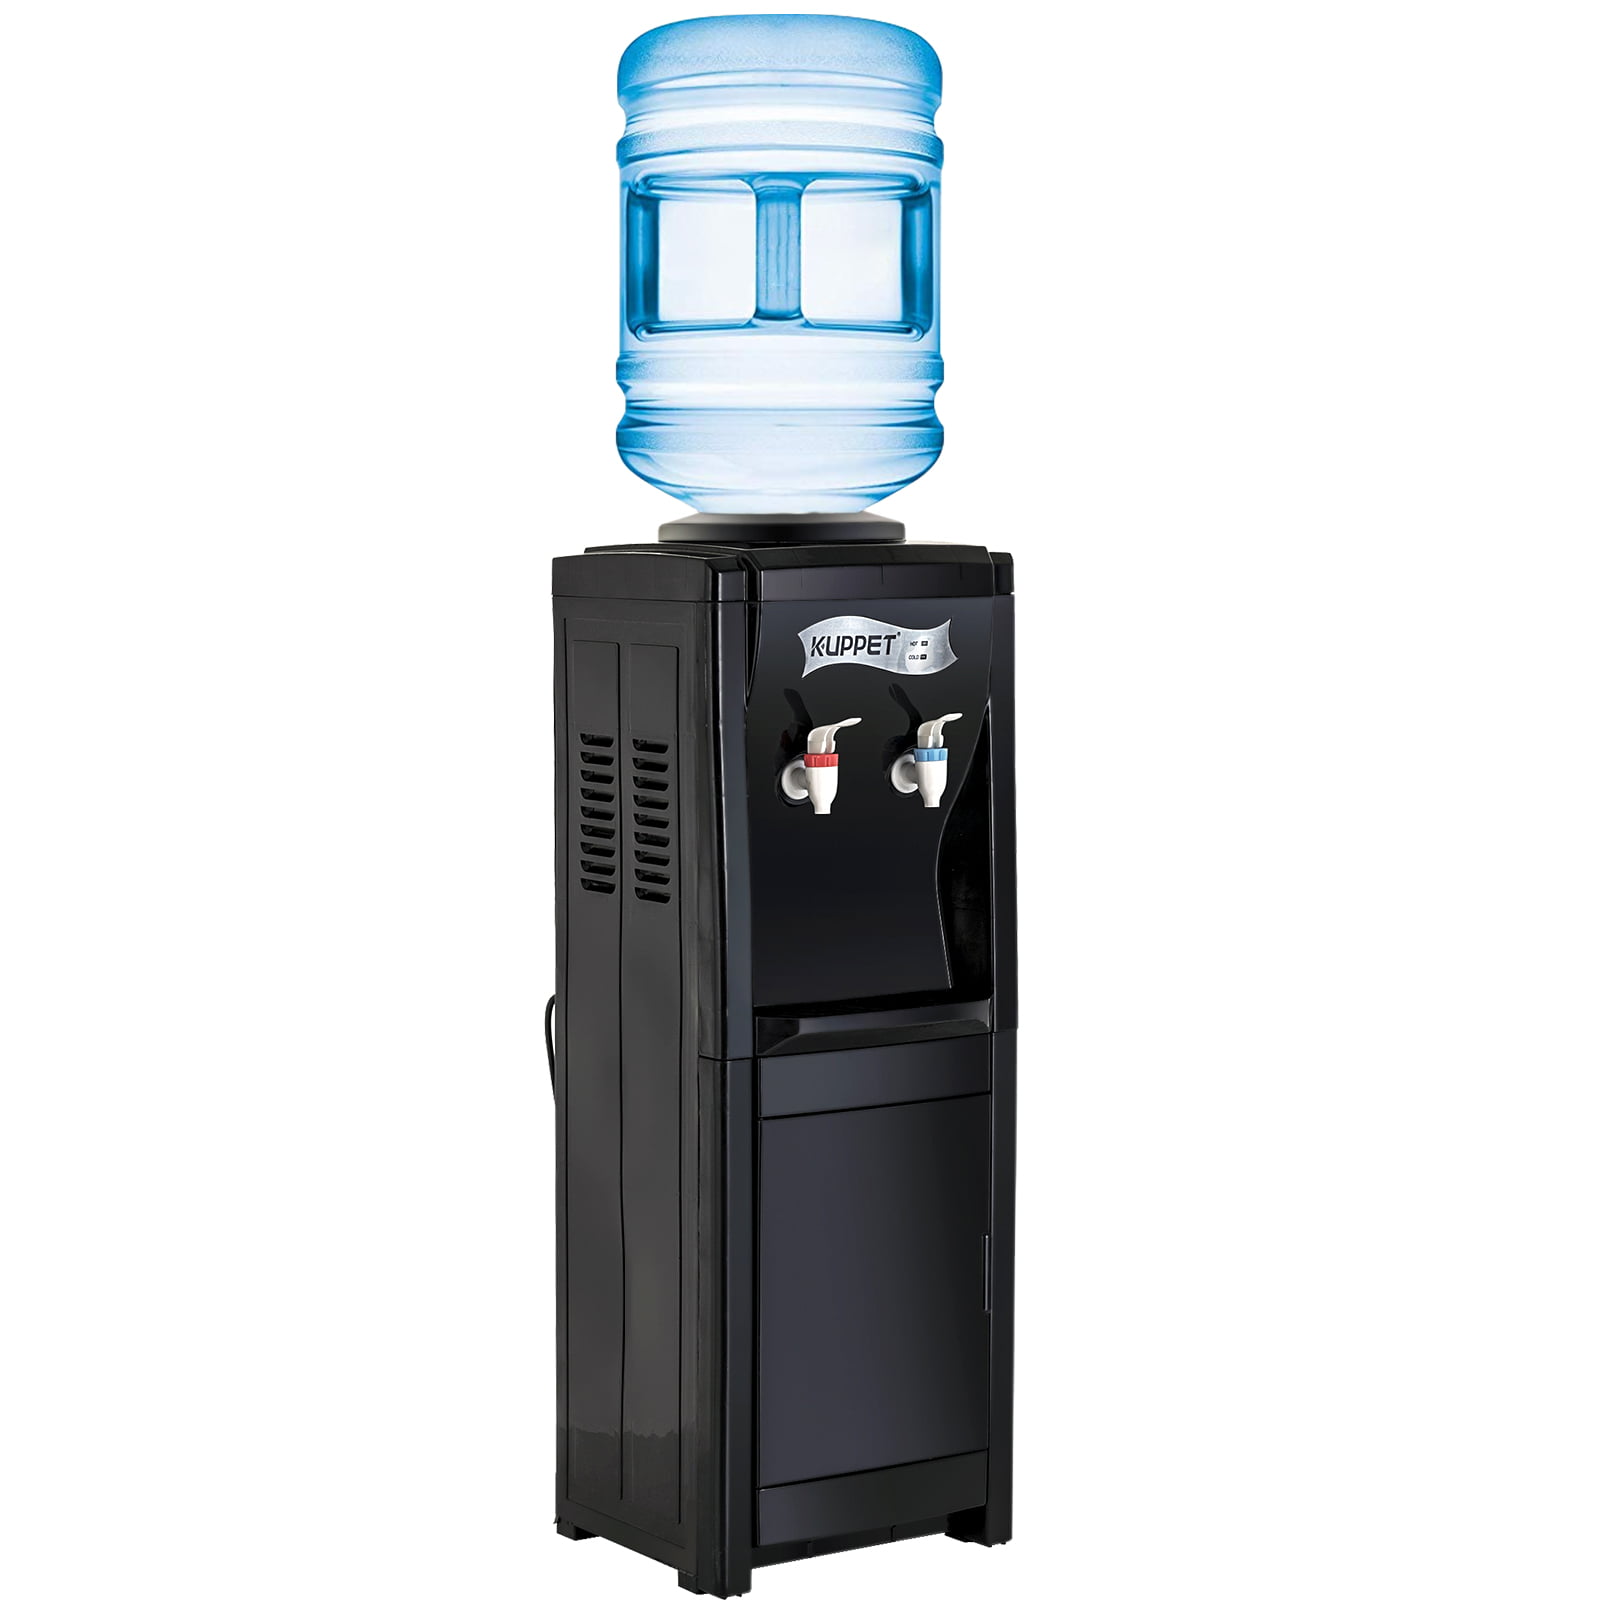 presentation of water dispenser